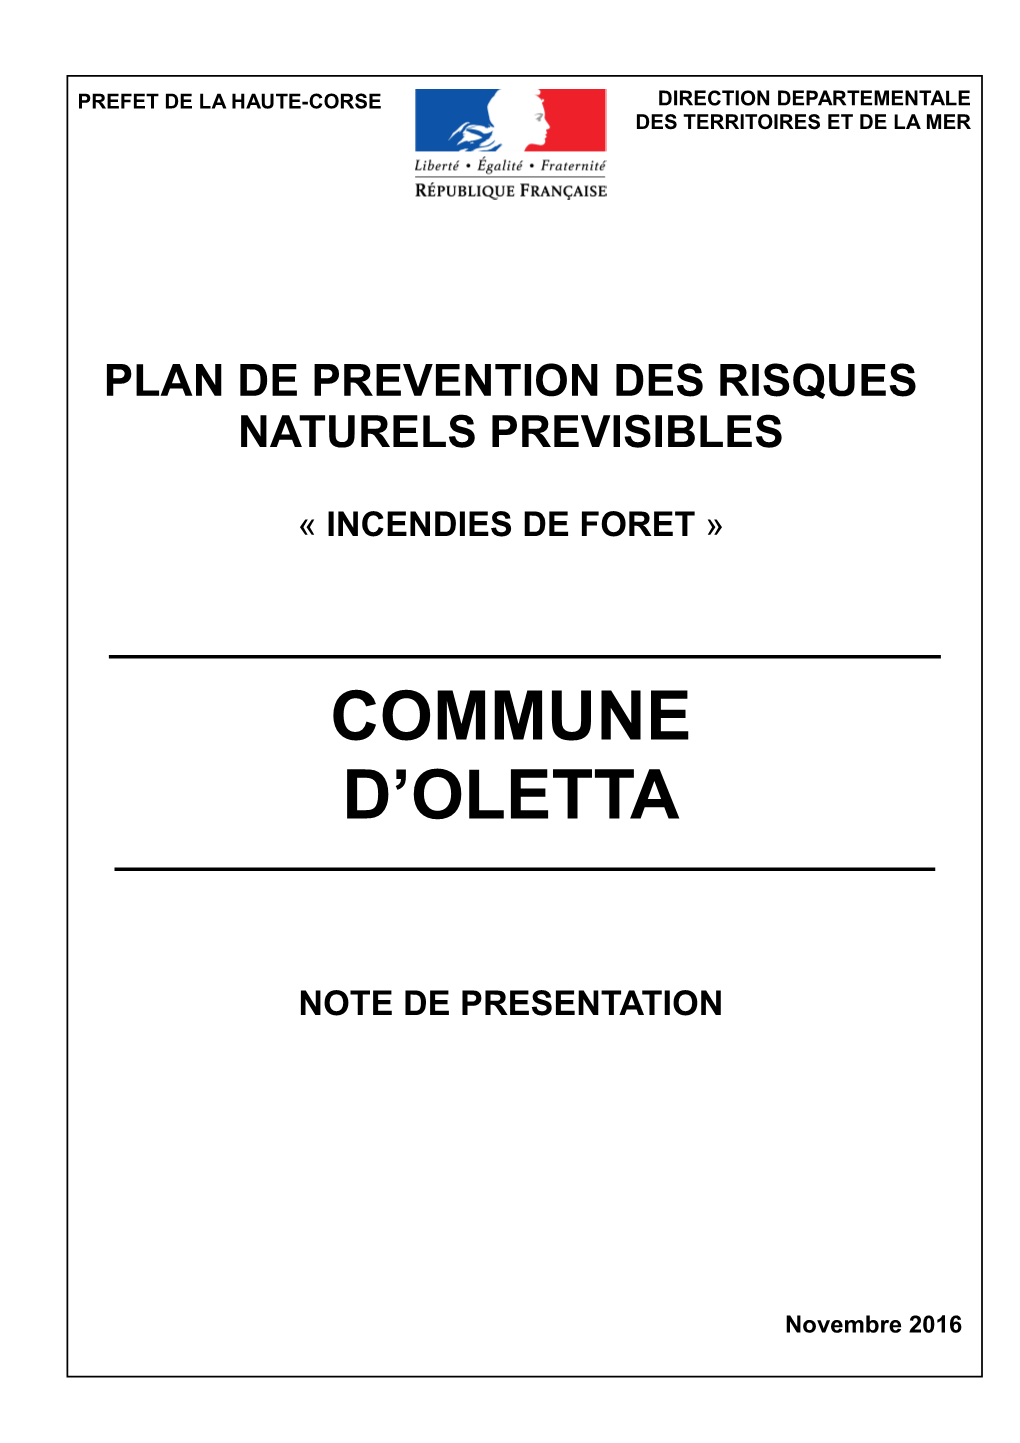 Presentation De La Commune D’Oletta